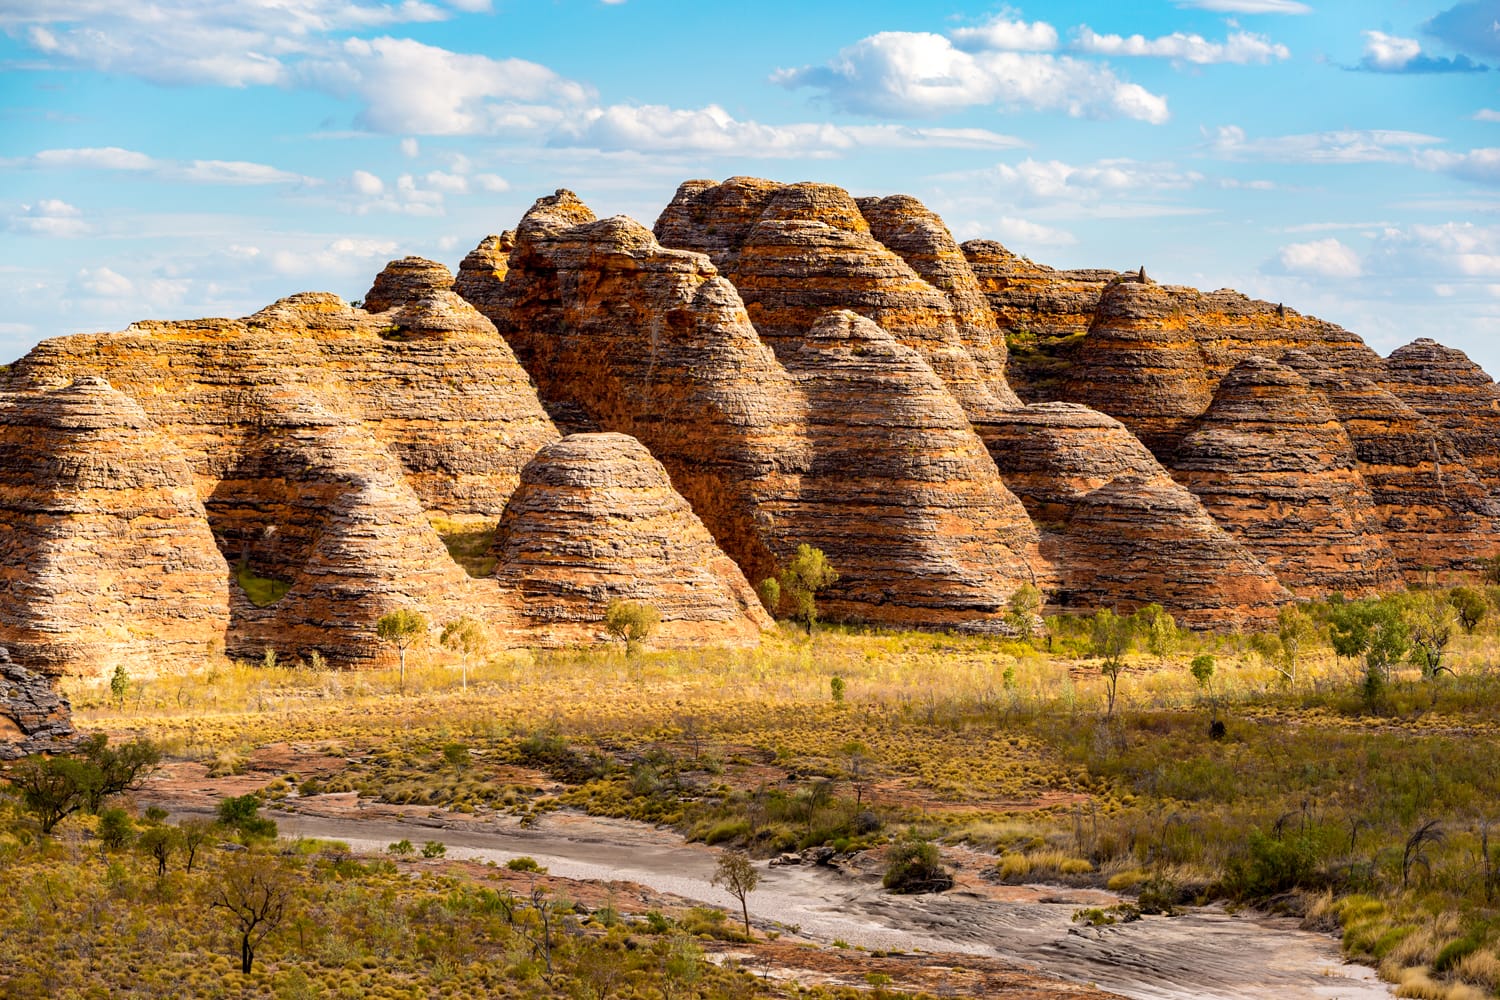 Purnululu National Park, Bungle Bungles rock formation in Australia